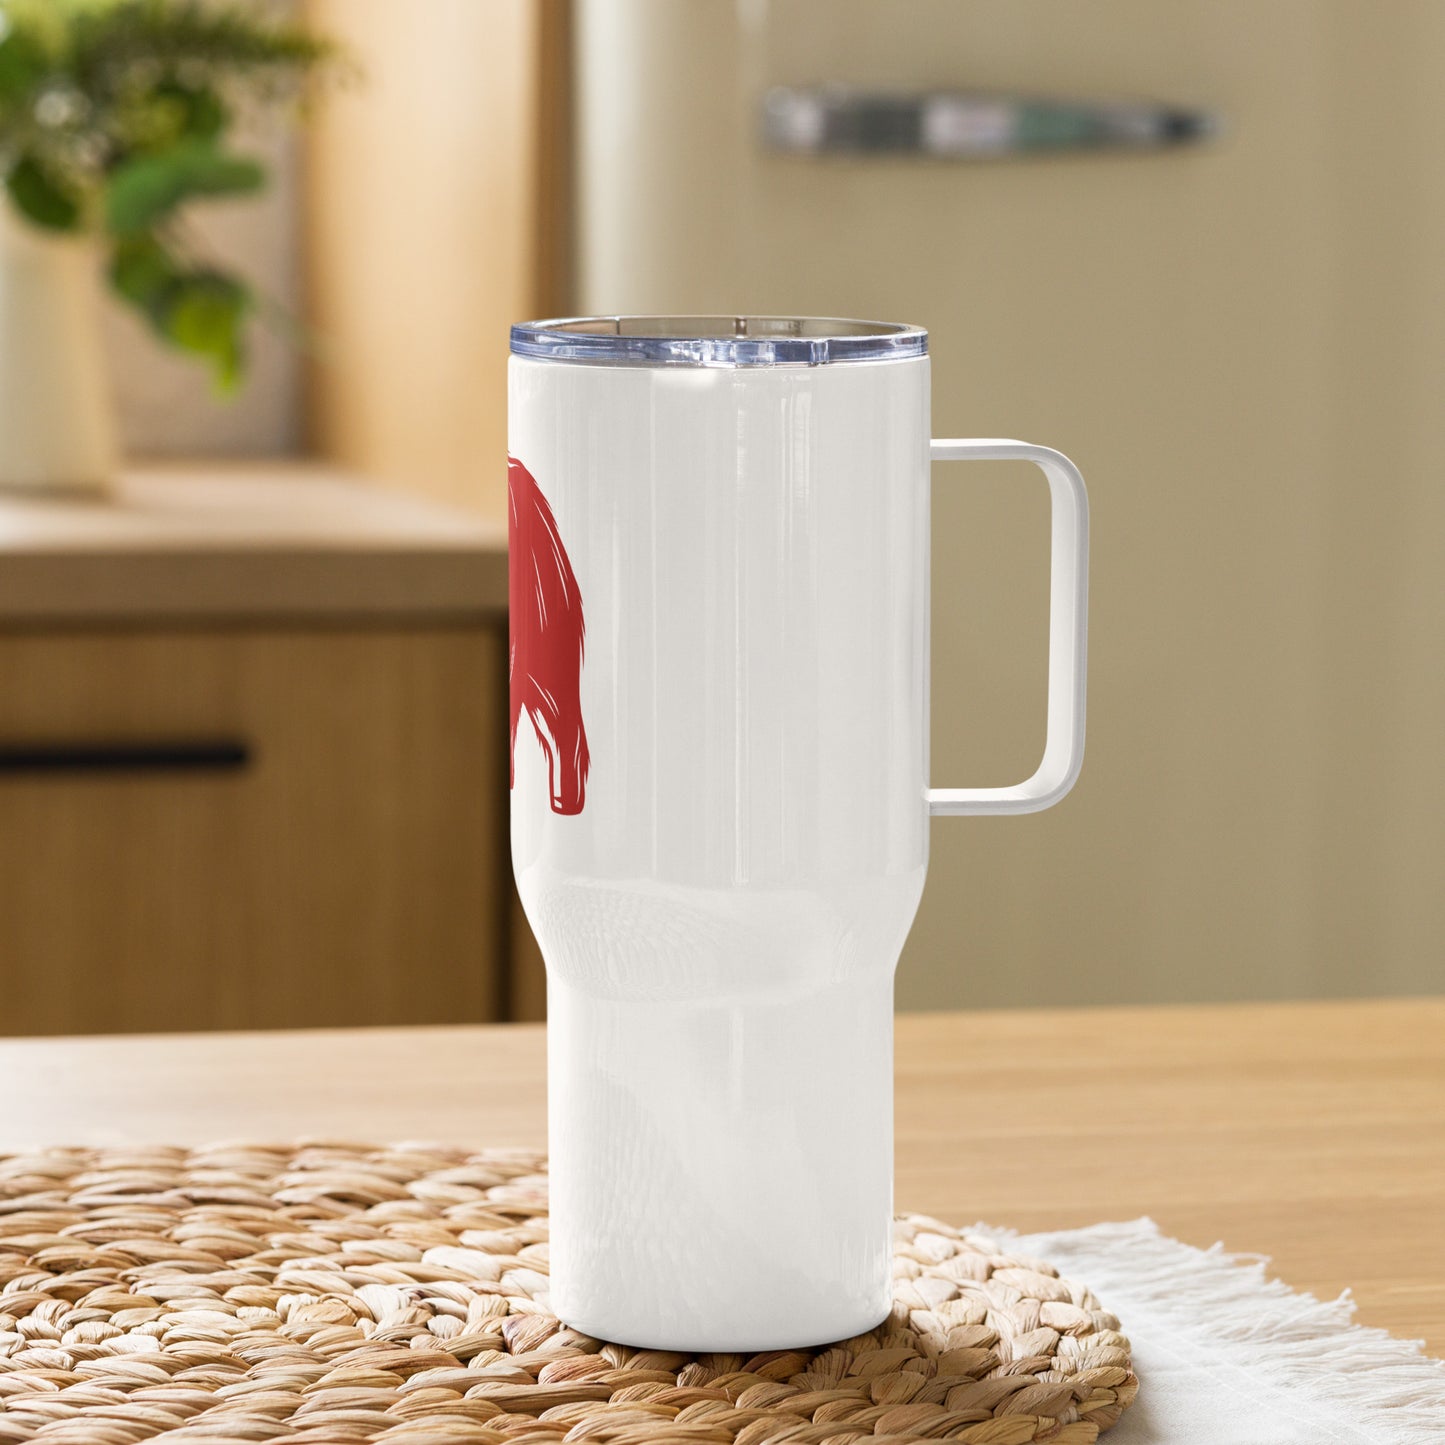 Arkansas Travel mug with a handle